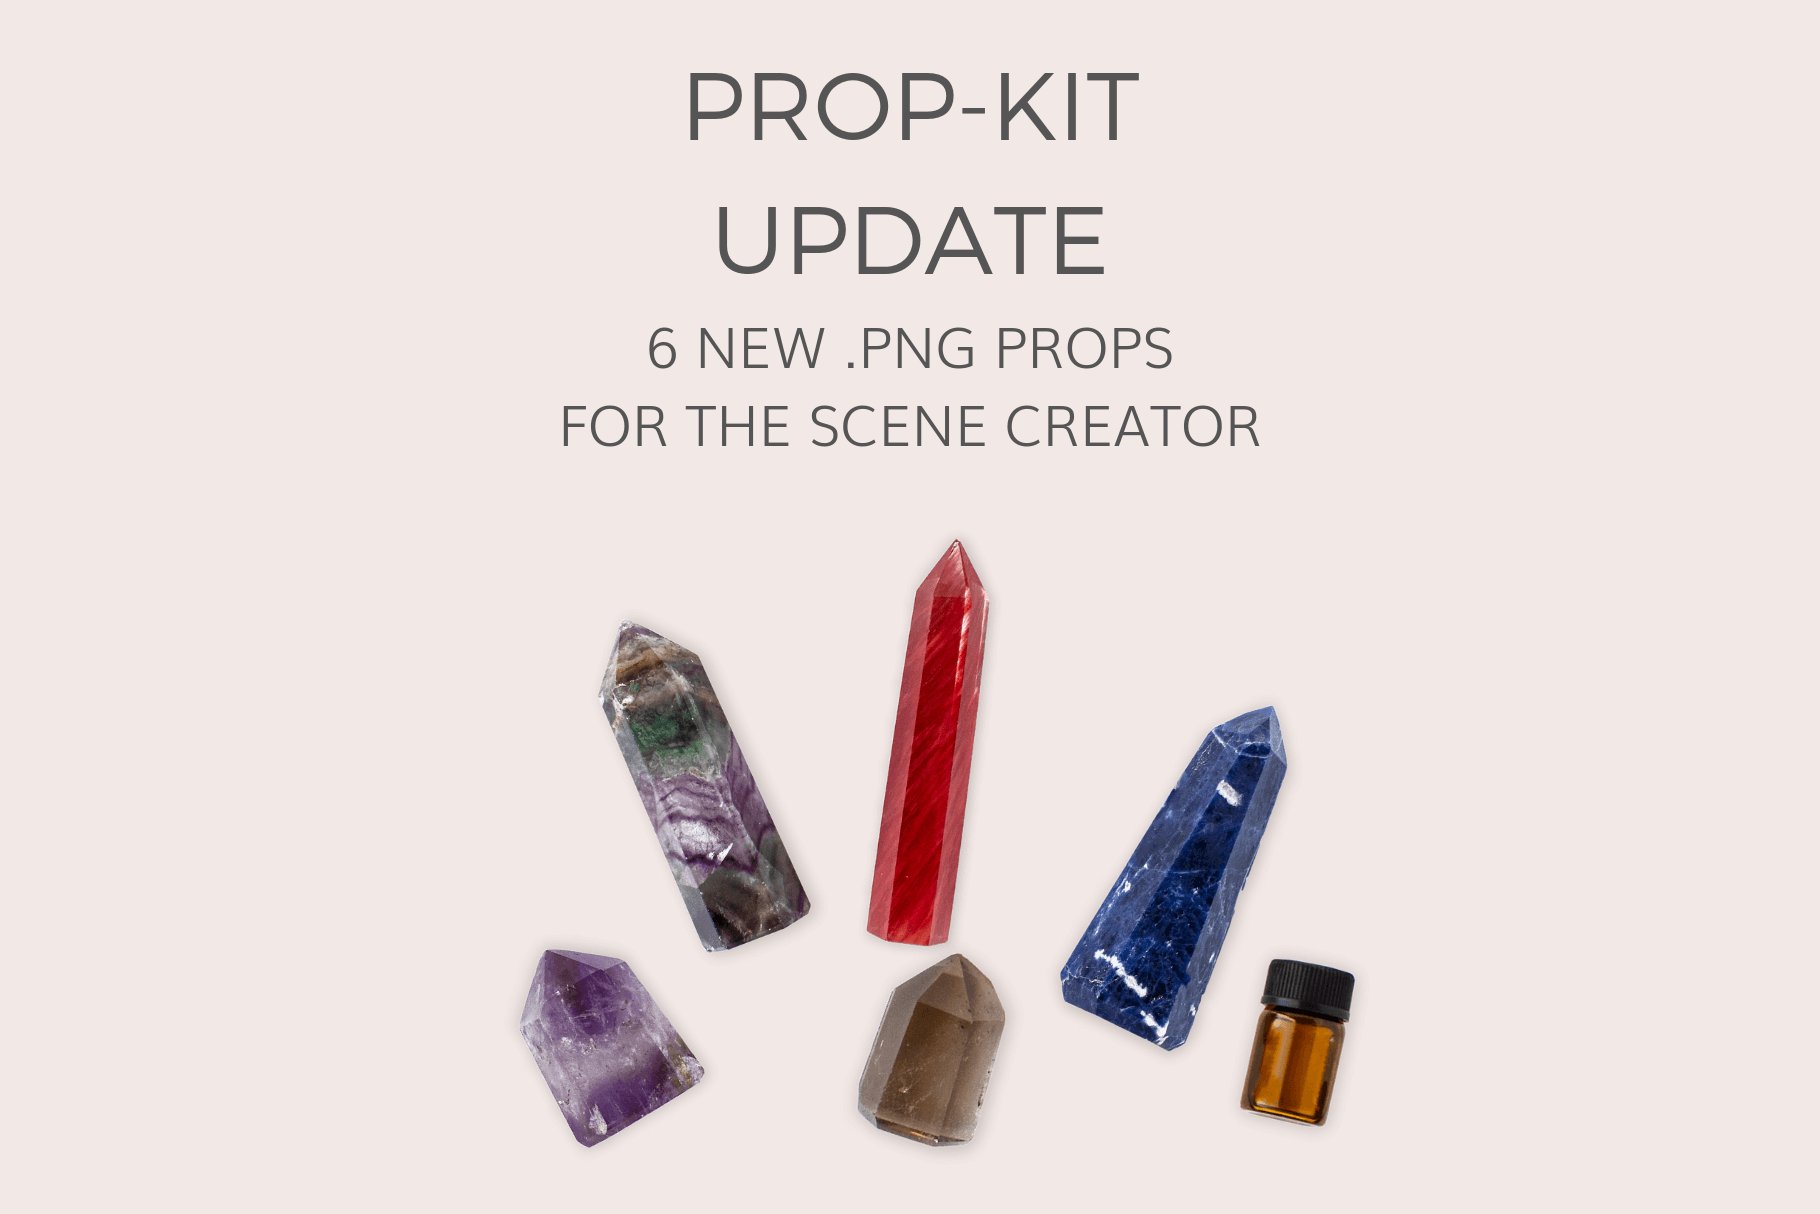 Prop-Kit Scene Creator Update(6 PNG) cover image.